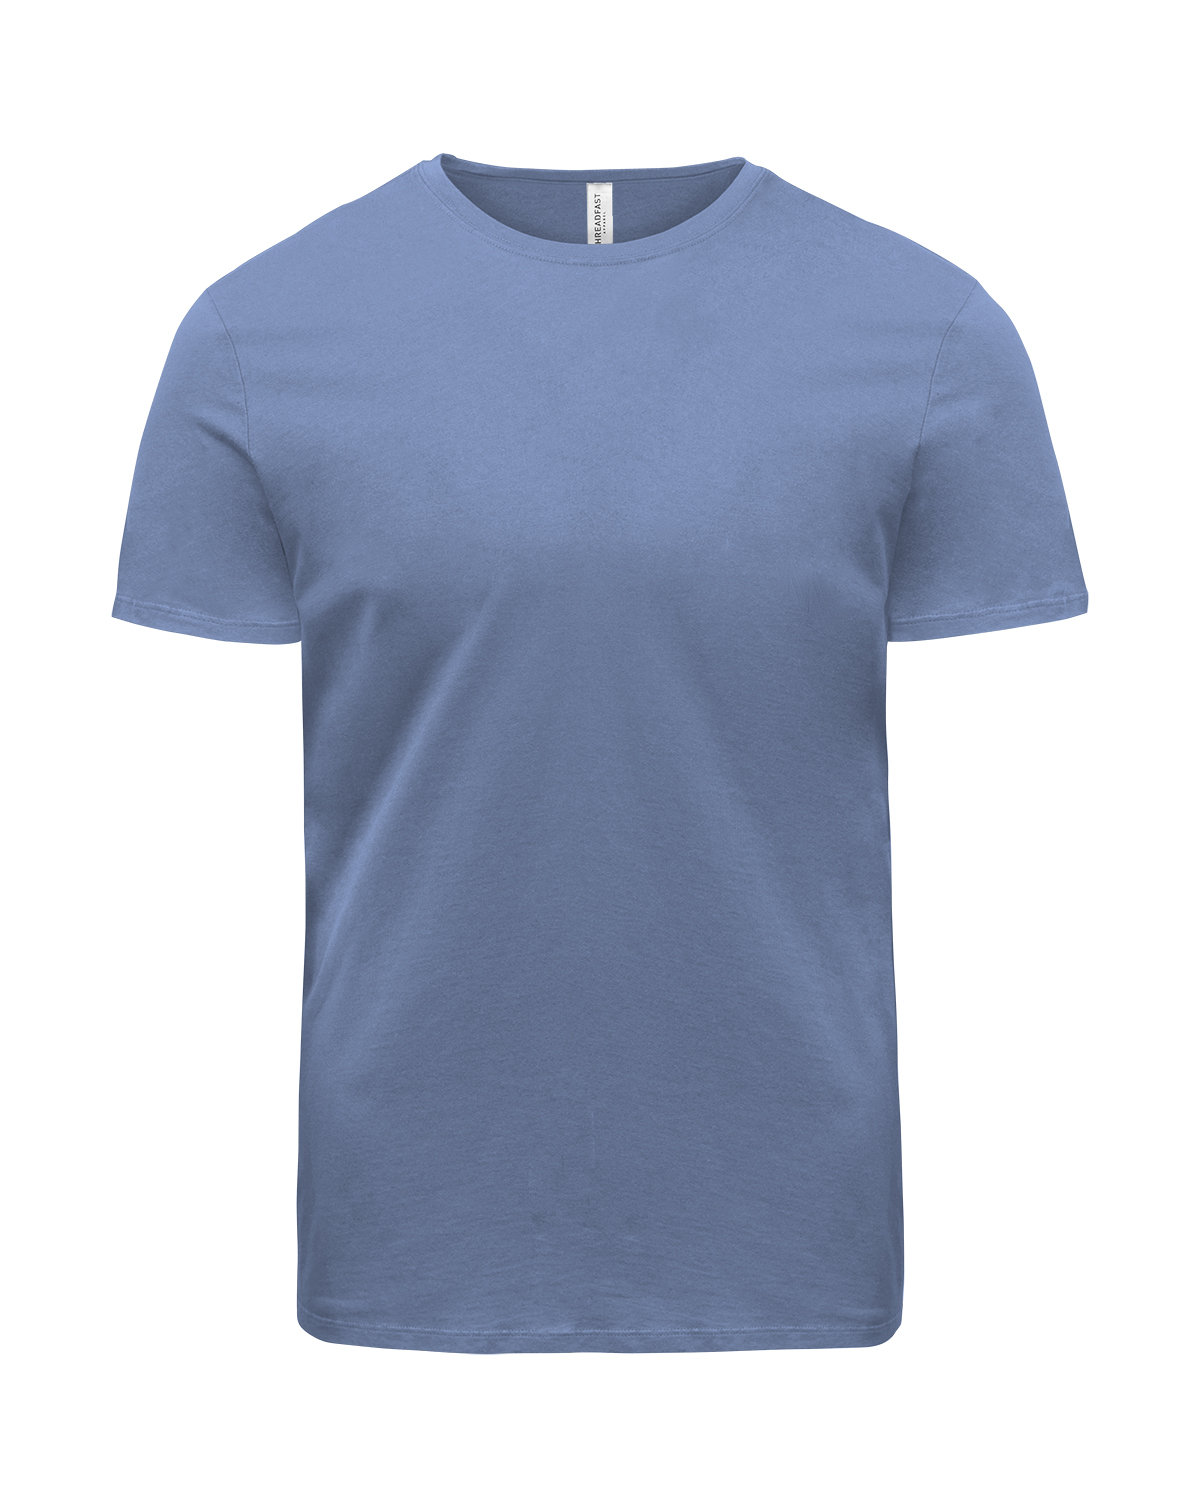 Threadfast Apparel 180A - Unisex Ultimate Cotton T-Shirt